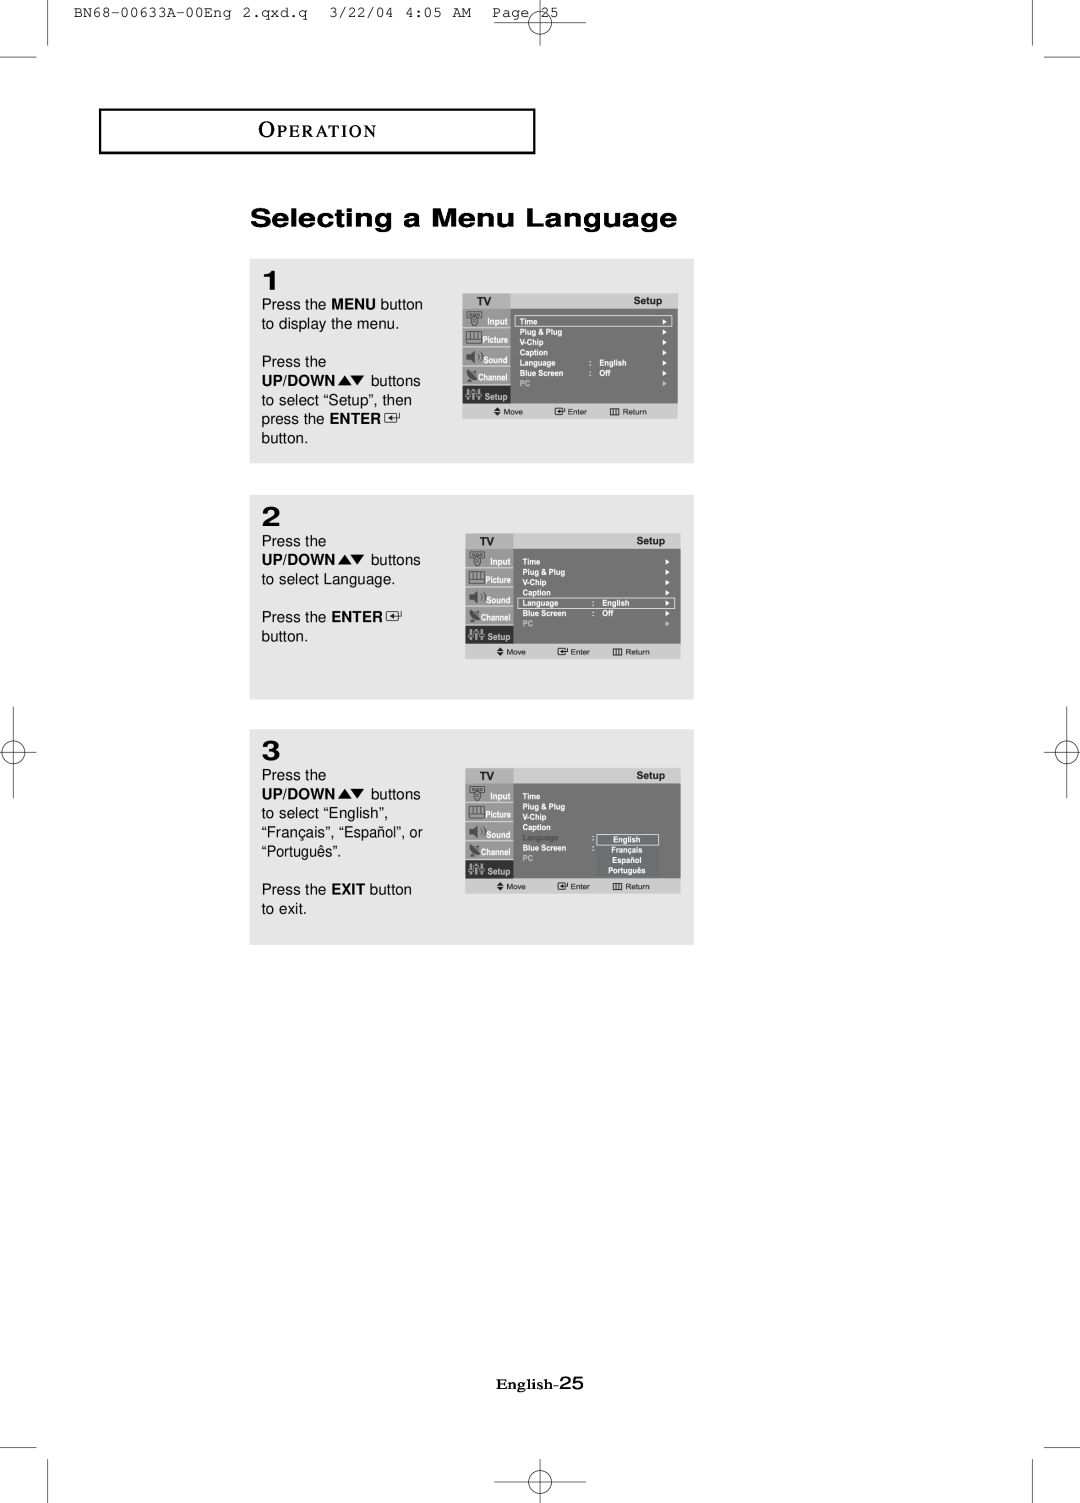 Samsung LT-P 1545 Selecting a Menu Language, O P E R At I O N, BN68-00633A-00Eng 2.qxd.q 3/22/04 405 AM Page, English-25 